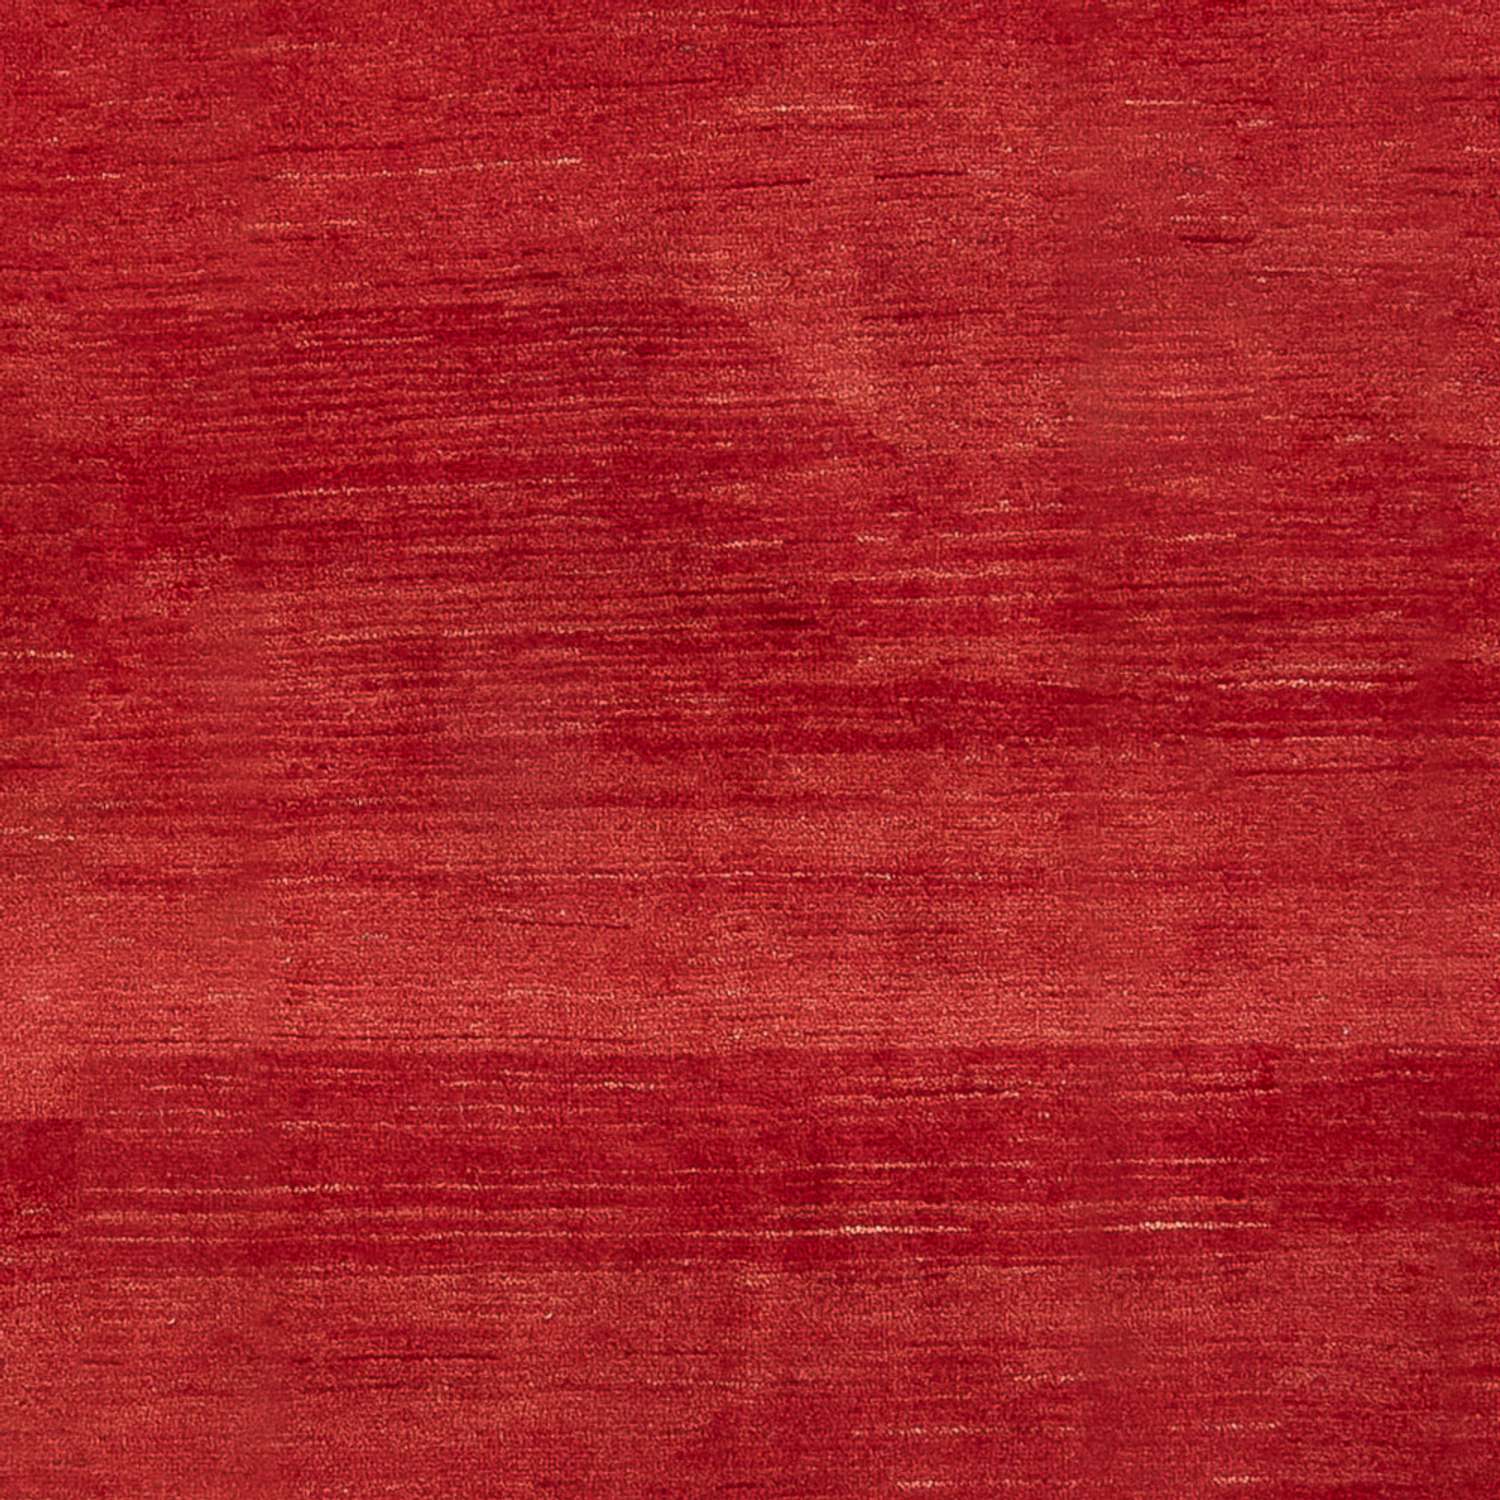 Gabbeh tapijt - Perzisch vierkant  - 210 x 210 cm - rood